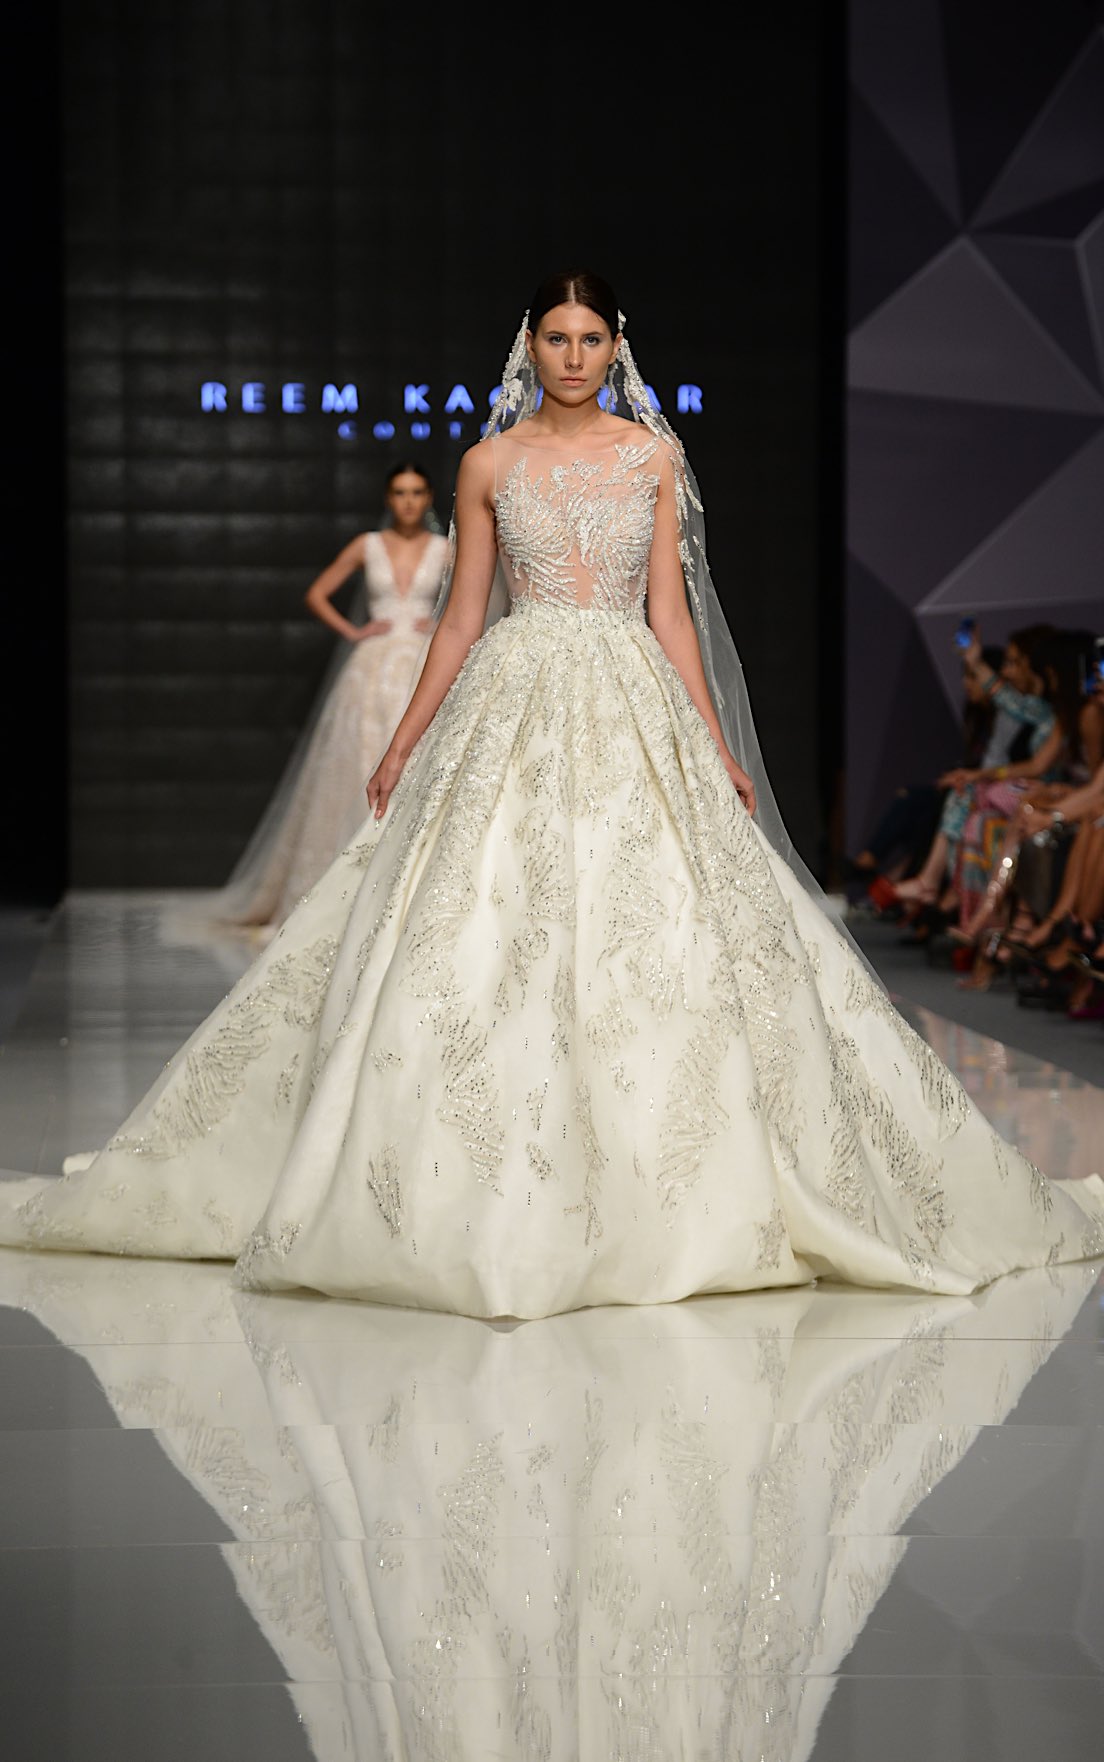 Bridal 2017 – Reem Kachmar Couture